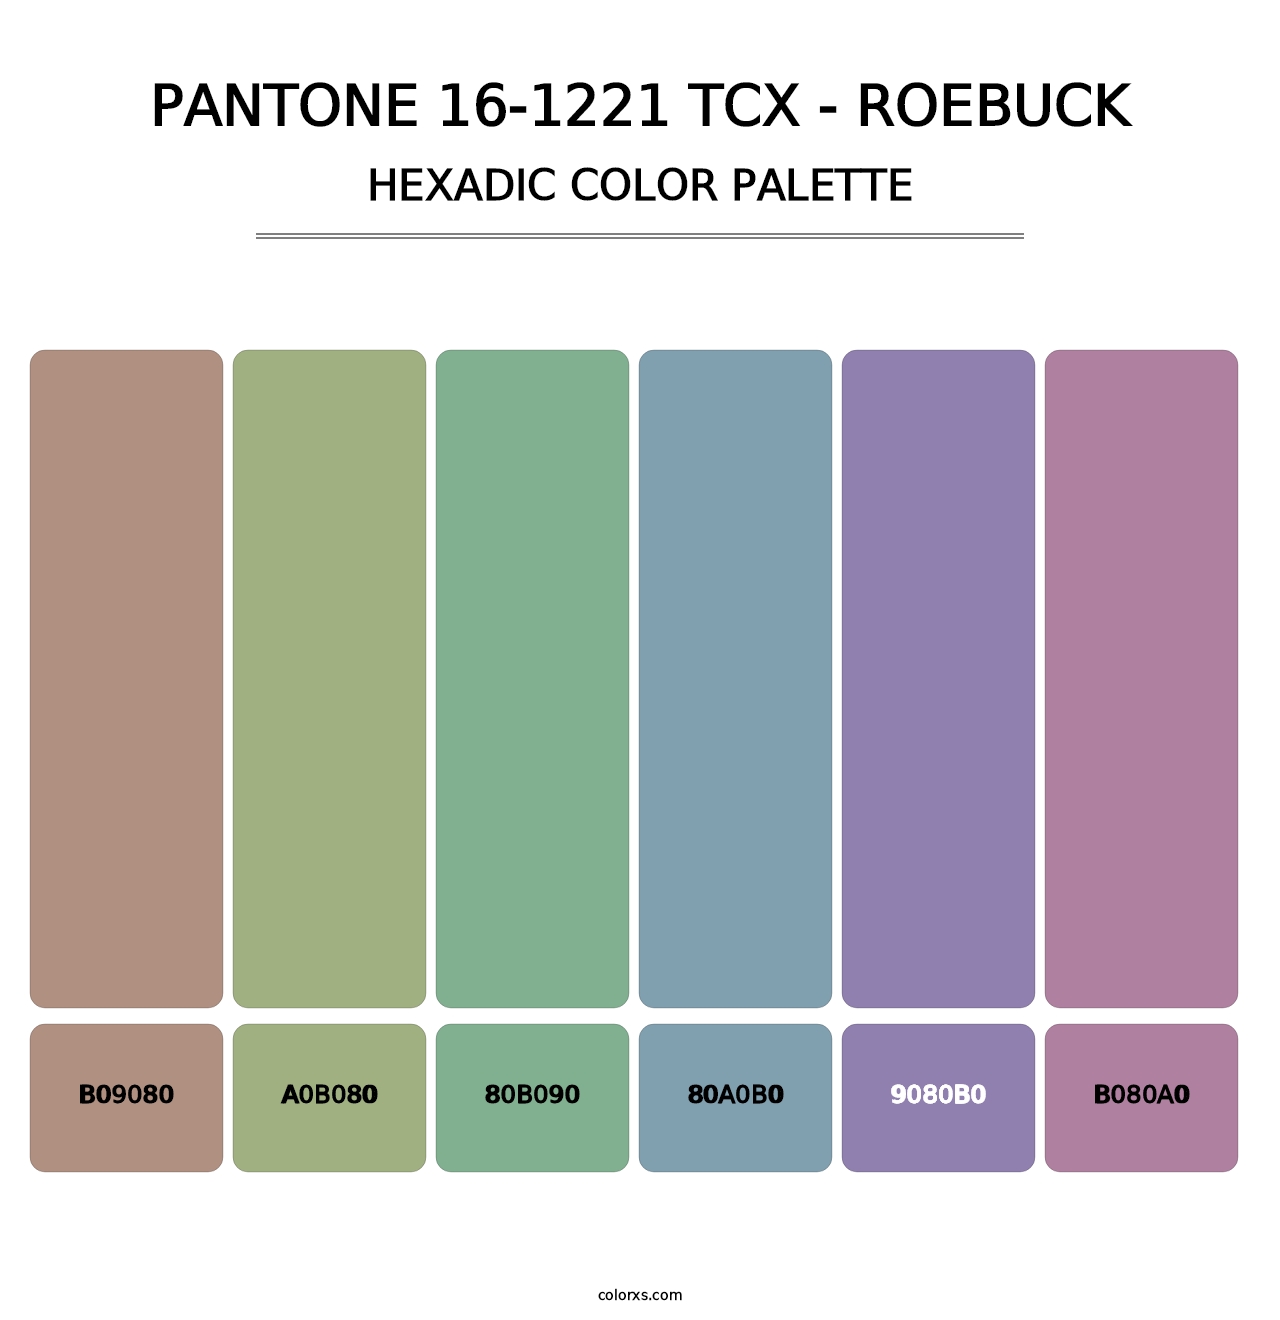 PANTONE 16-1221 TCX - Roebuck - Hexadic Color Palette